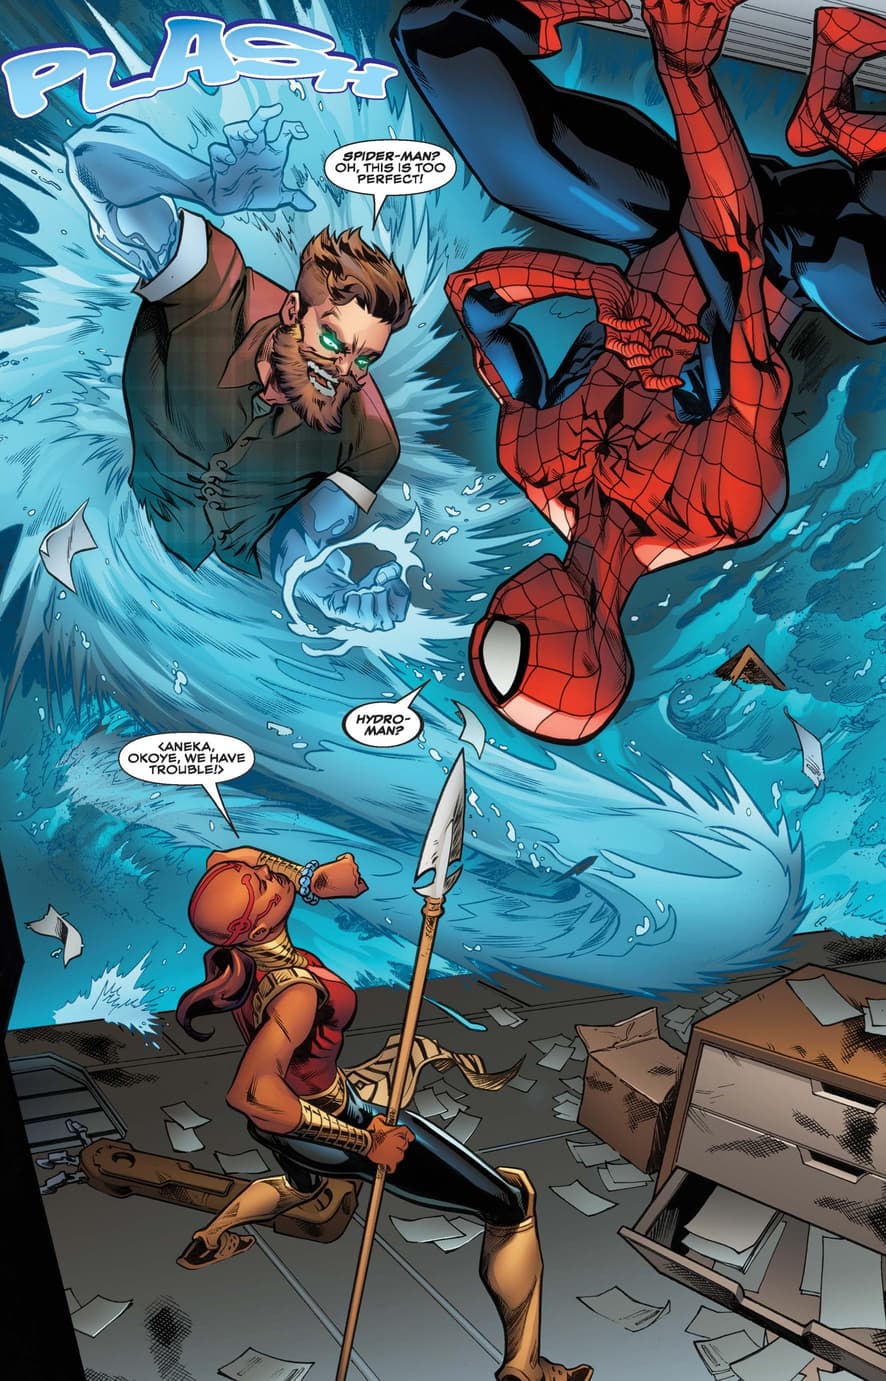 Ayo saves the day in AMAZING SPIDER-MAN: WAKANDA FOREVER (2018) #1.